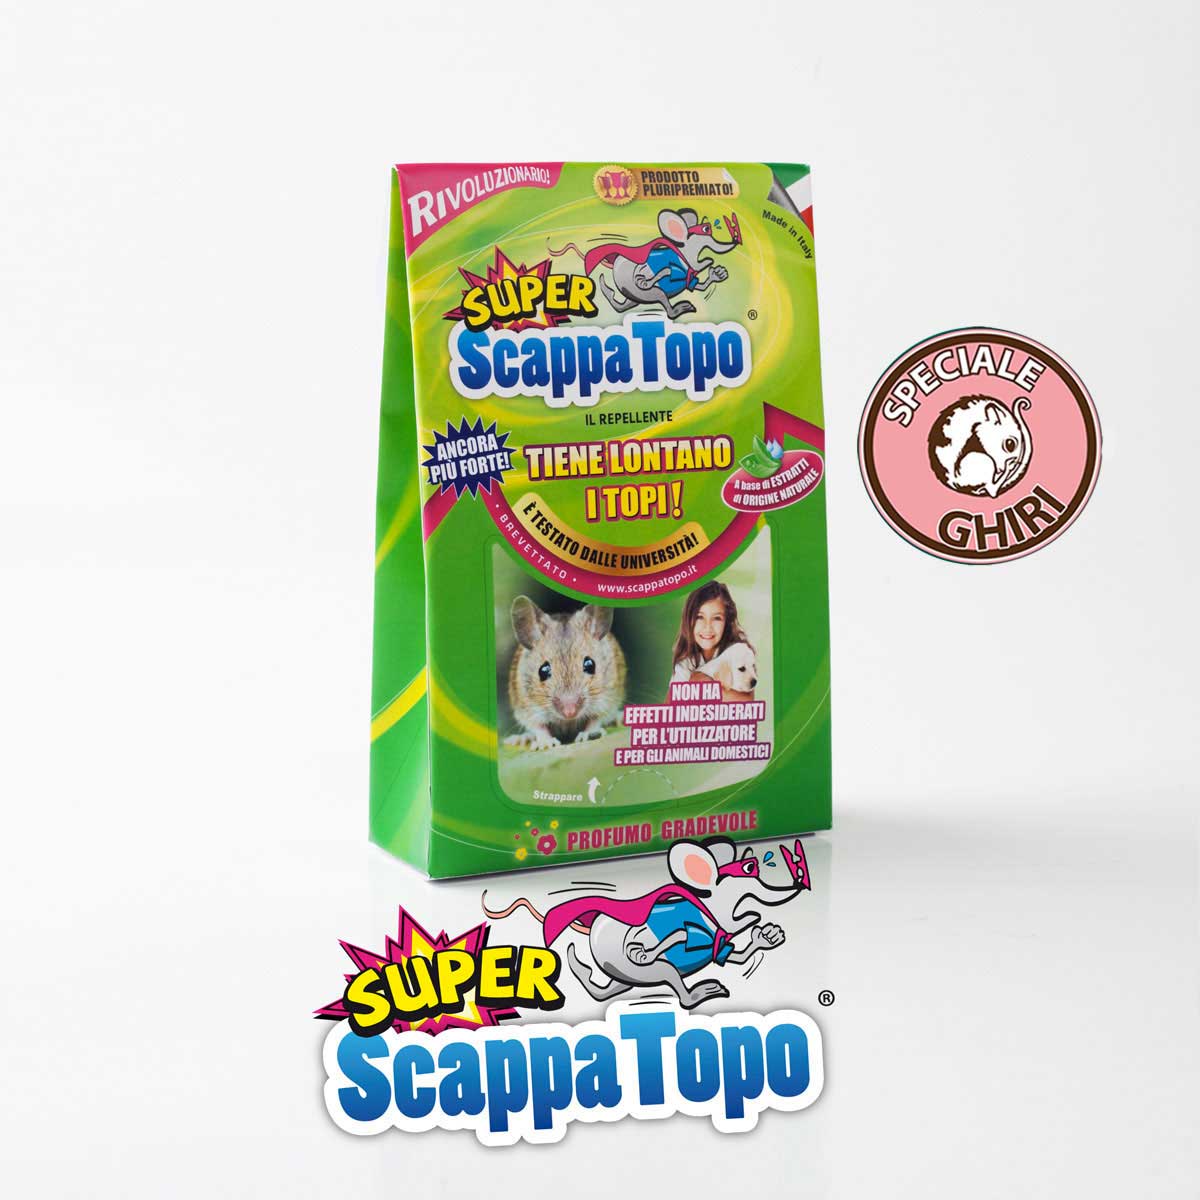 ScappaTopo Basic